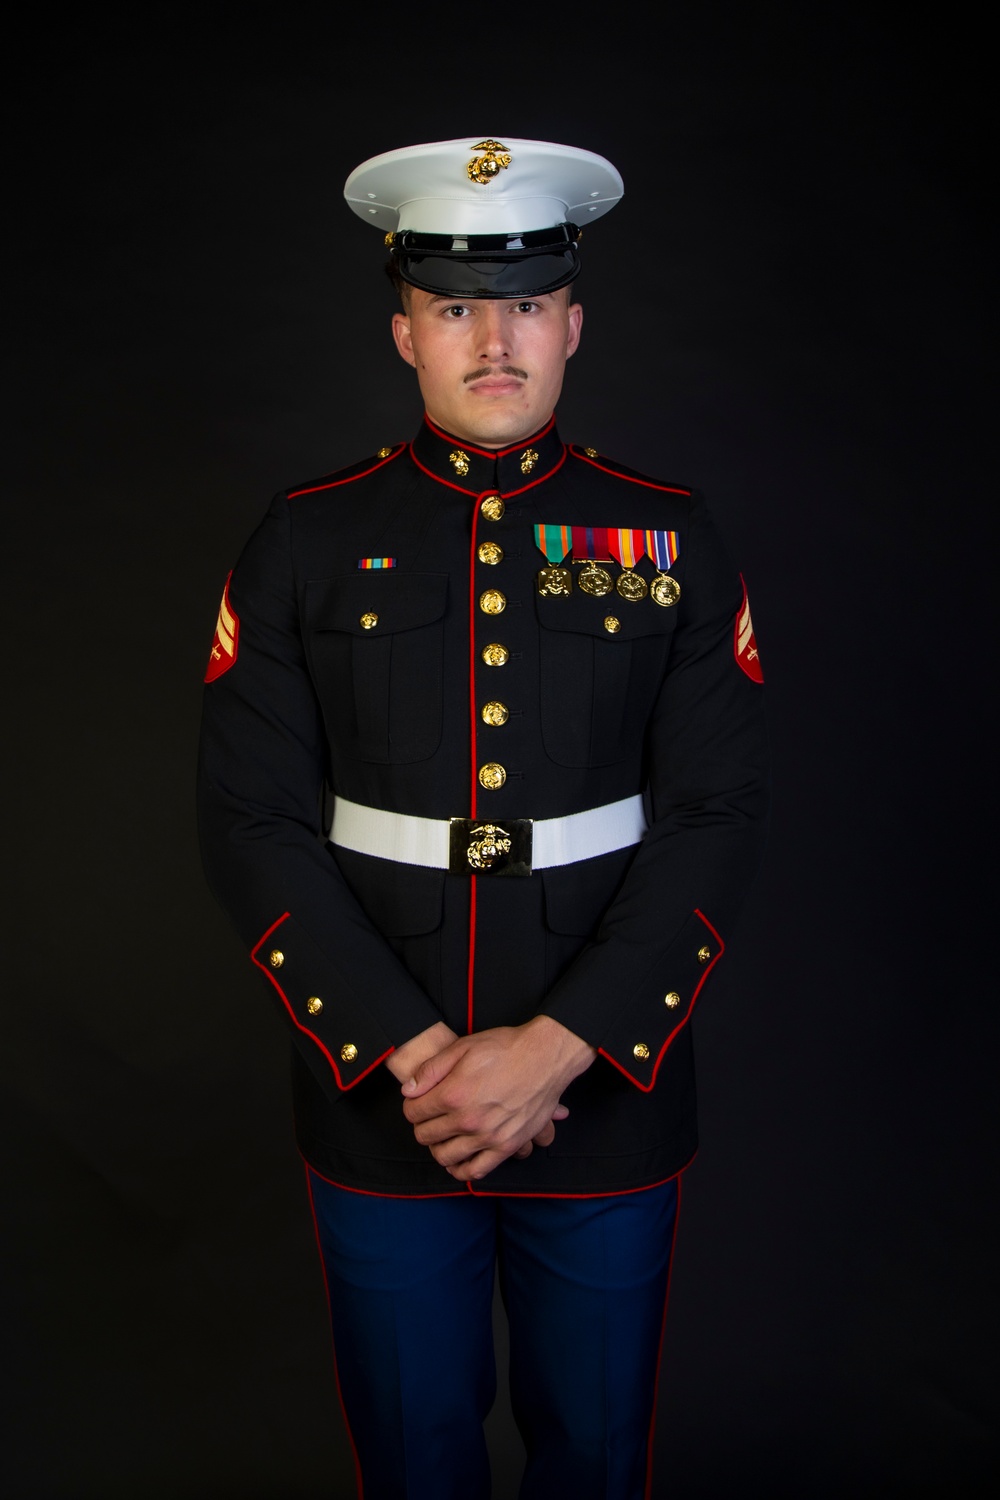 DVIDS - Images - Marine Corps Dress Blues [Image 3 of 3]